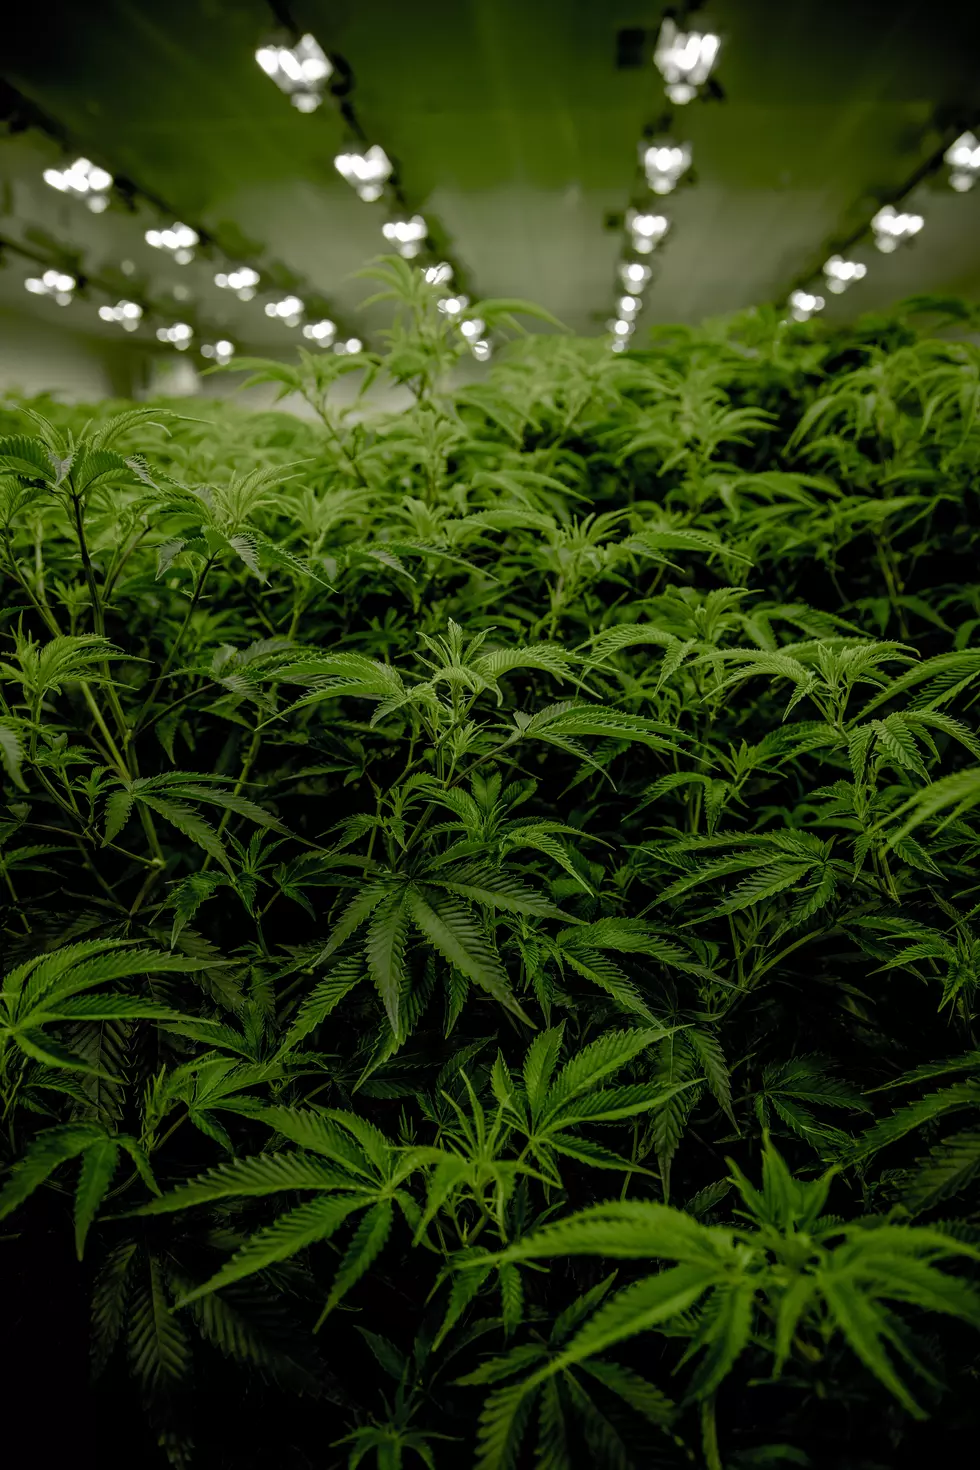 Michigan Marijuana Jobs Doubled In 2020